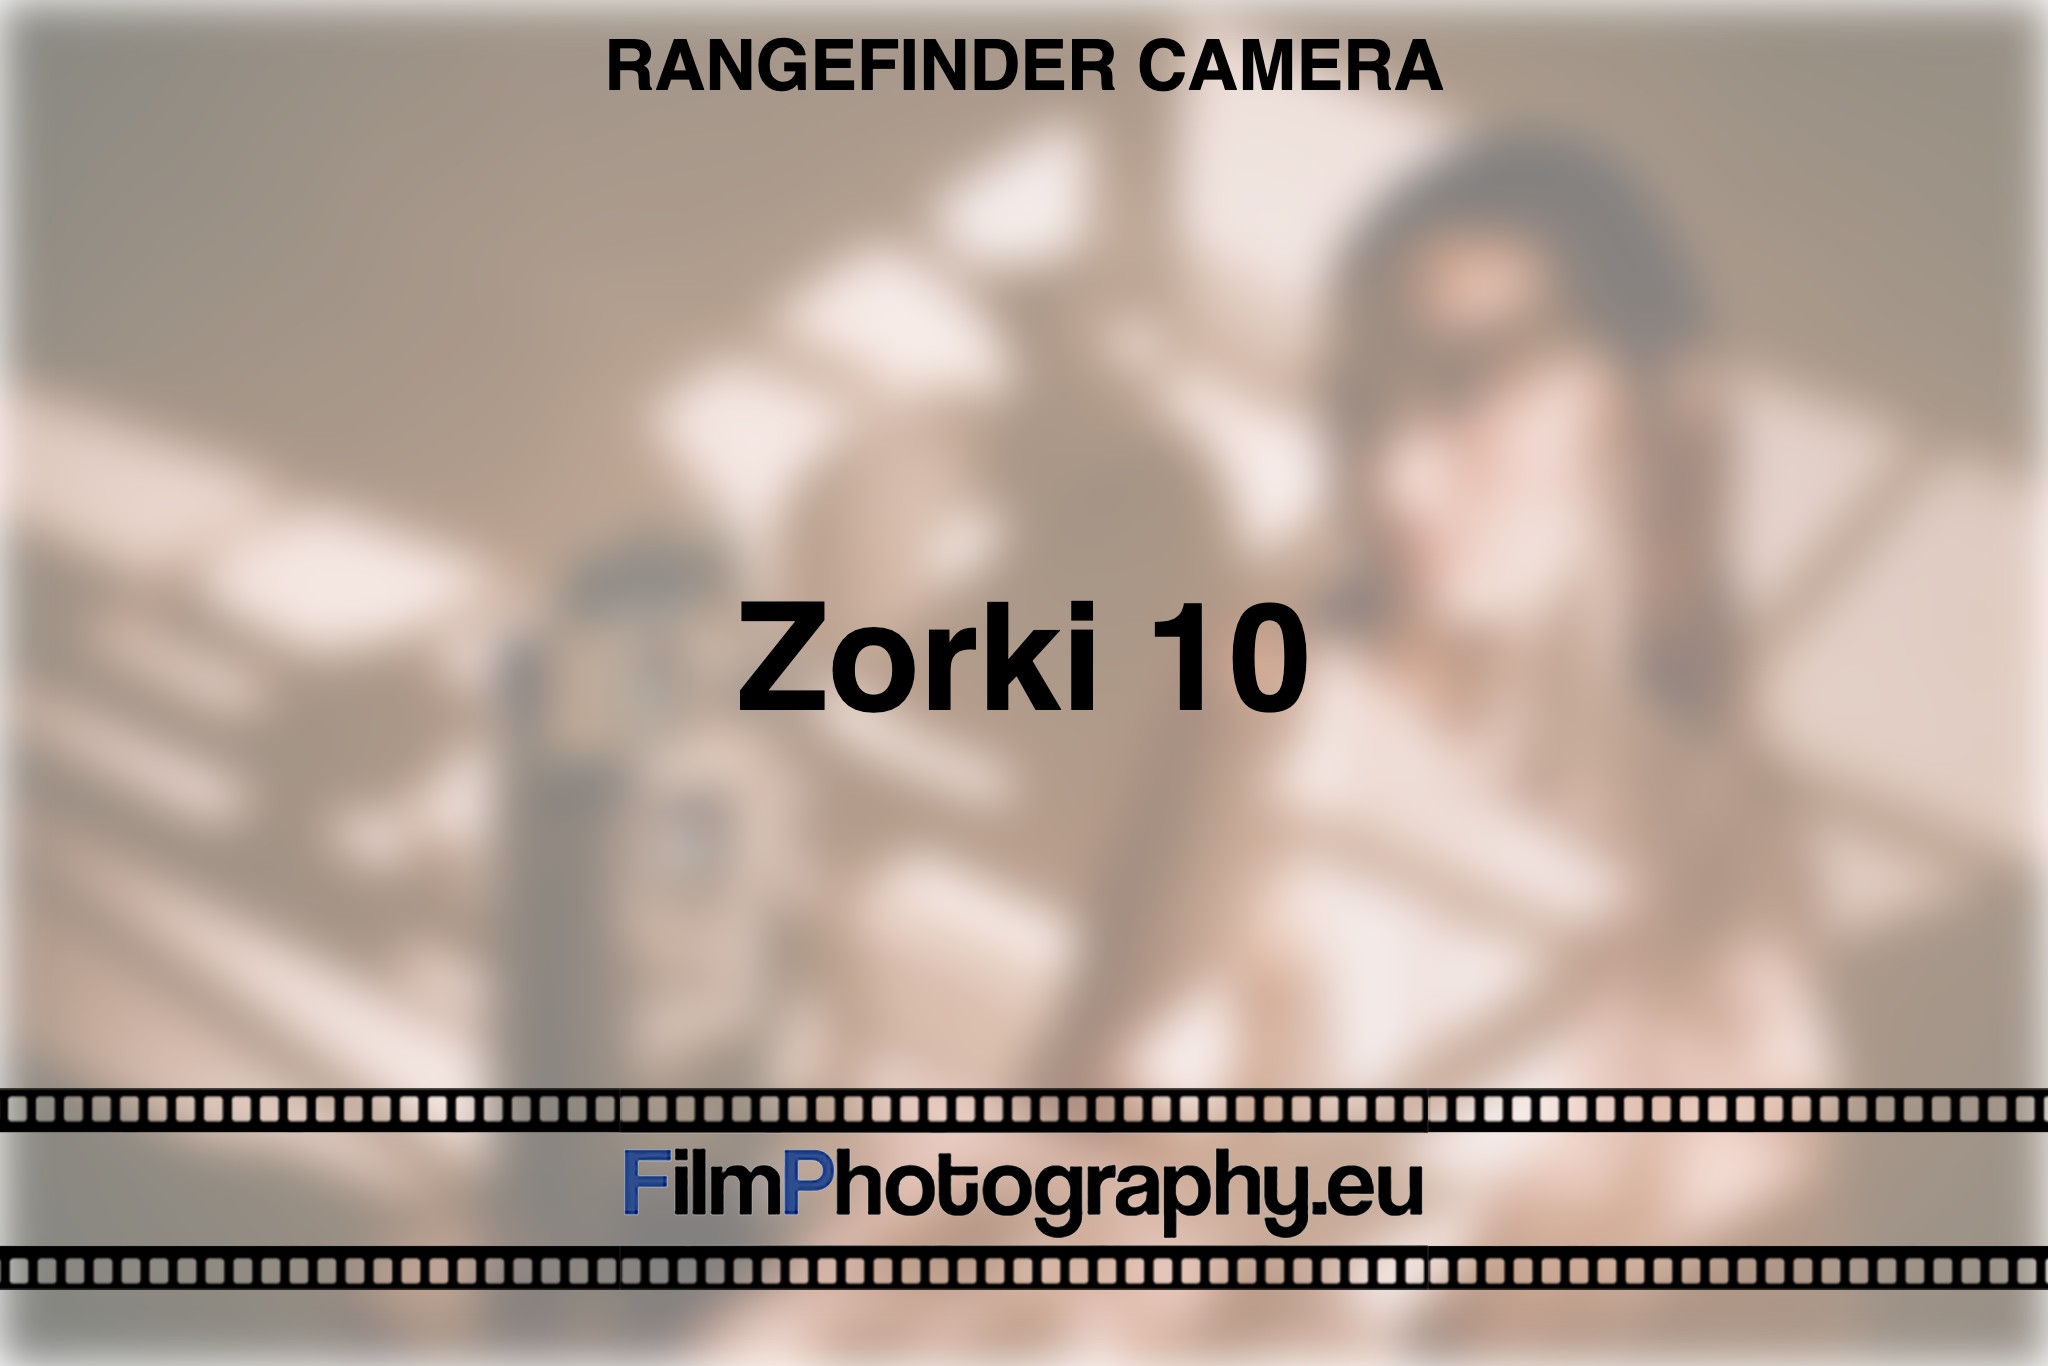 zorki-10-rangefinder-camera-bnv